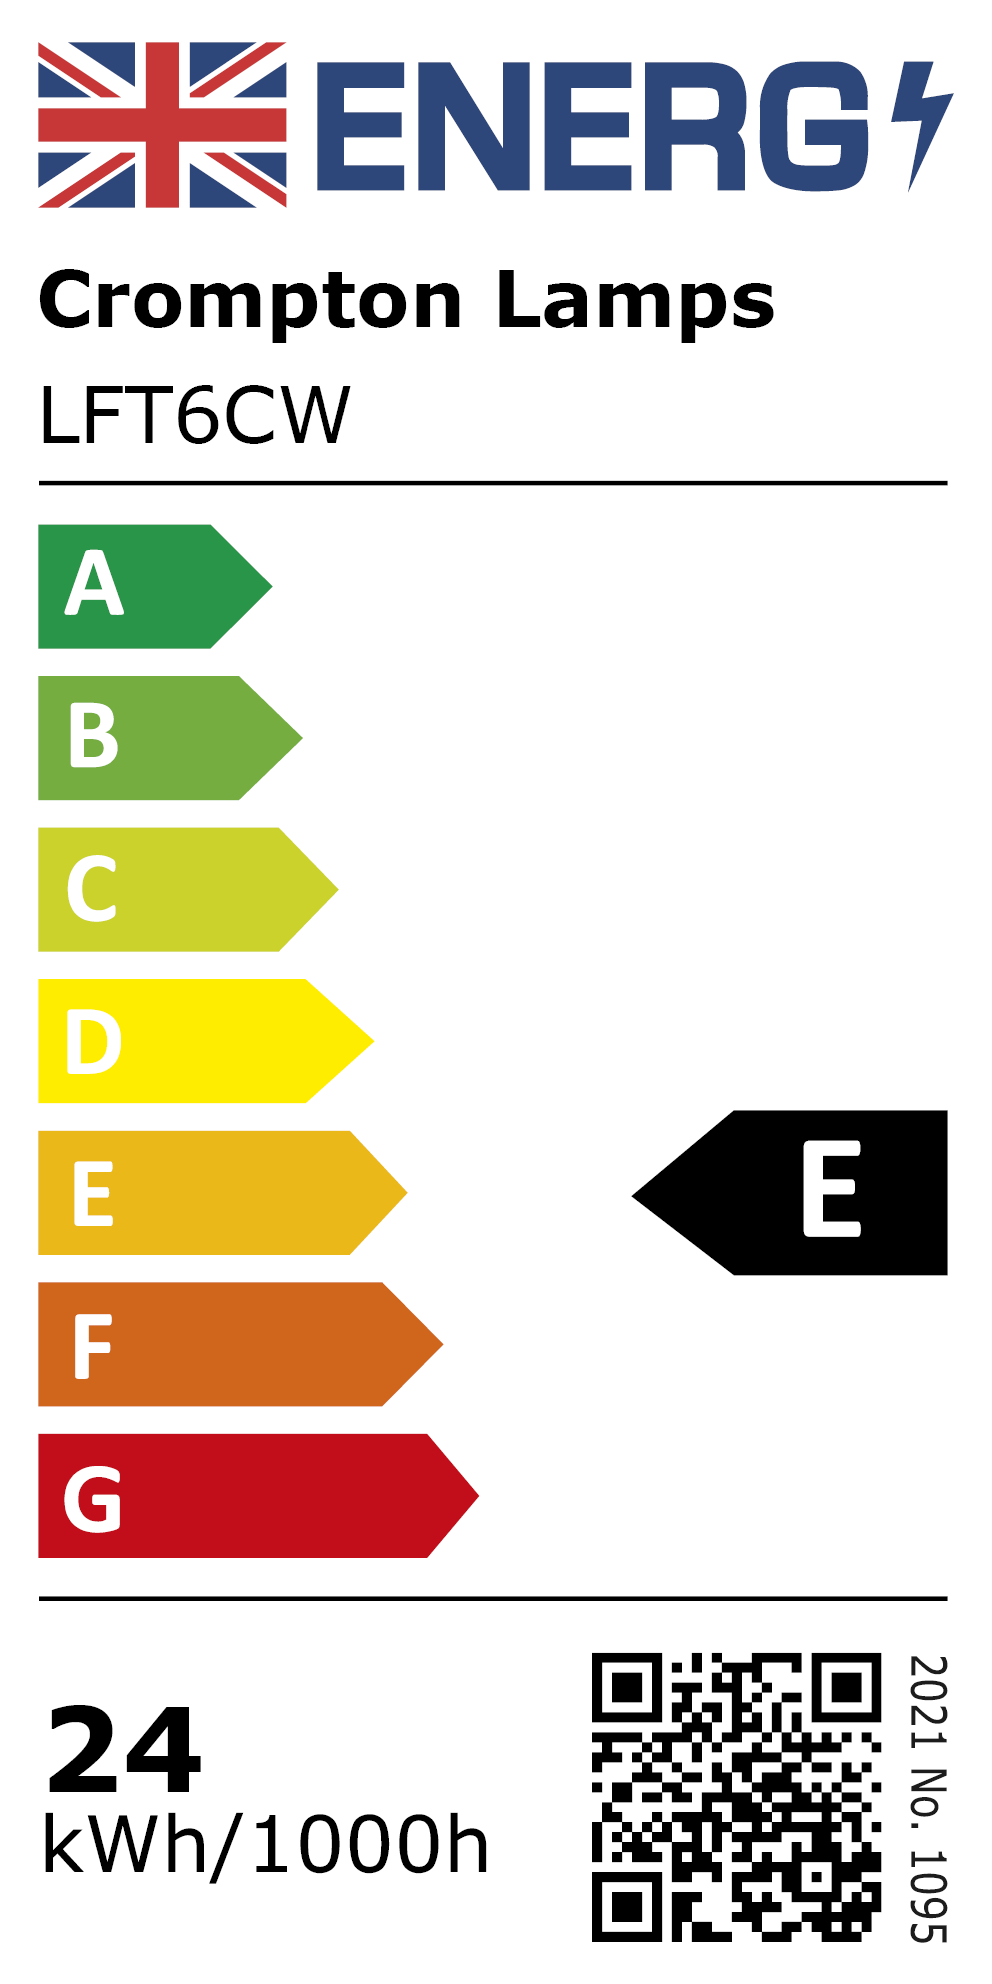 New 2021 Energy Rating Label: MPN LFT6CW